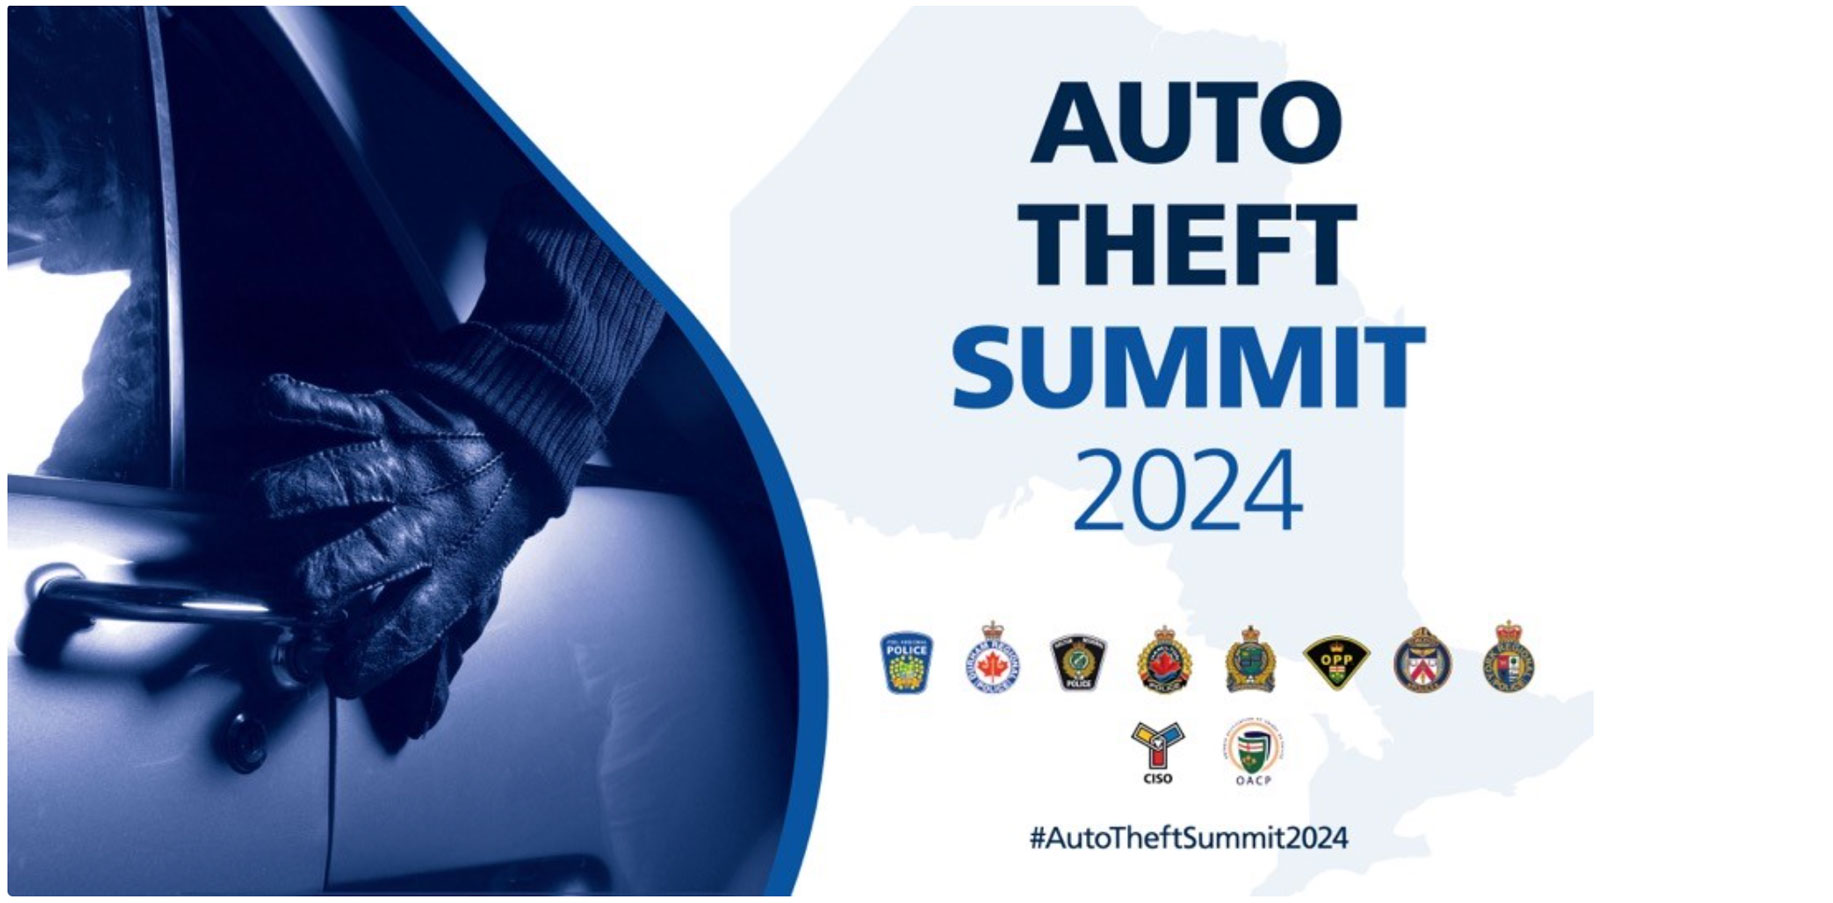 Dealer concerns heard at 2nd Peel Auto Theft Summit